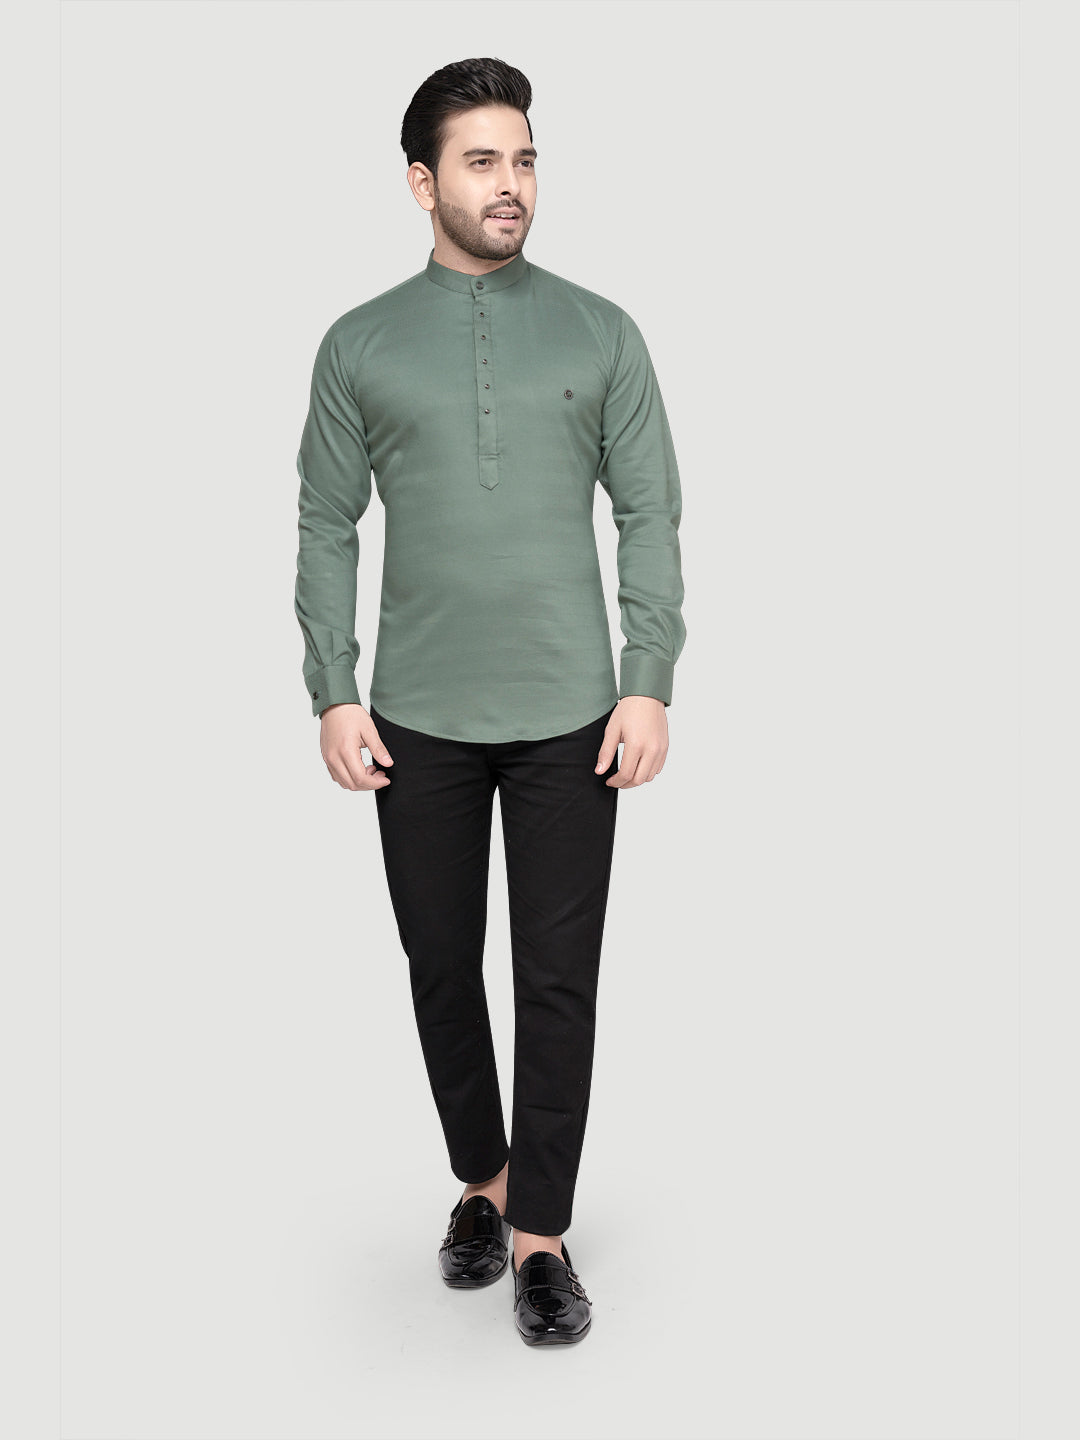 Black and White Shirts Men's Designer Short Kurta with Metal Buttons Teal Green